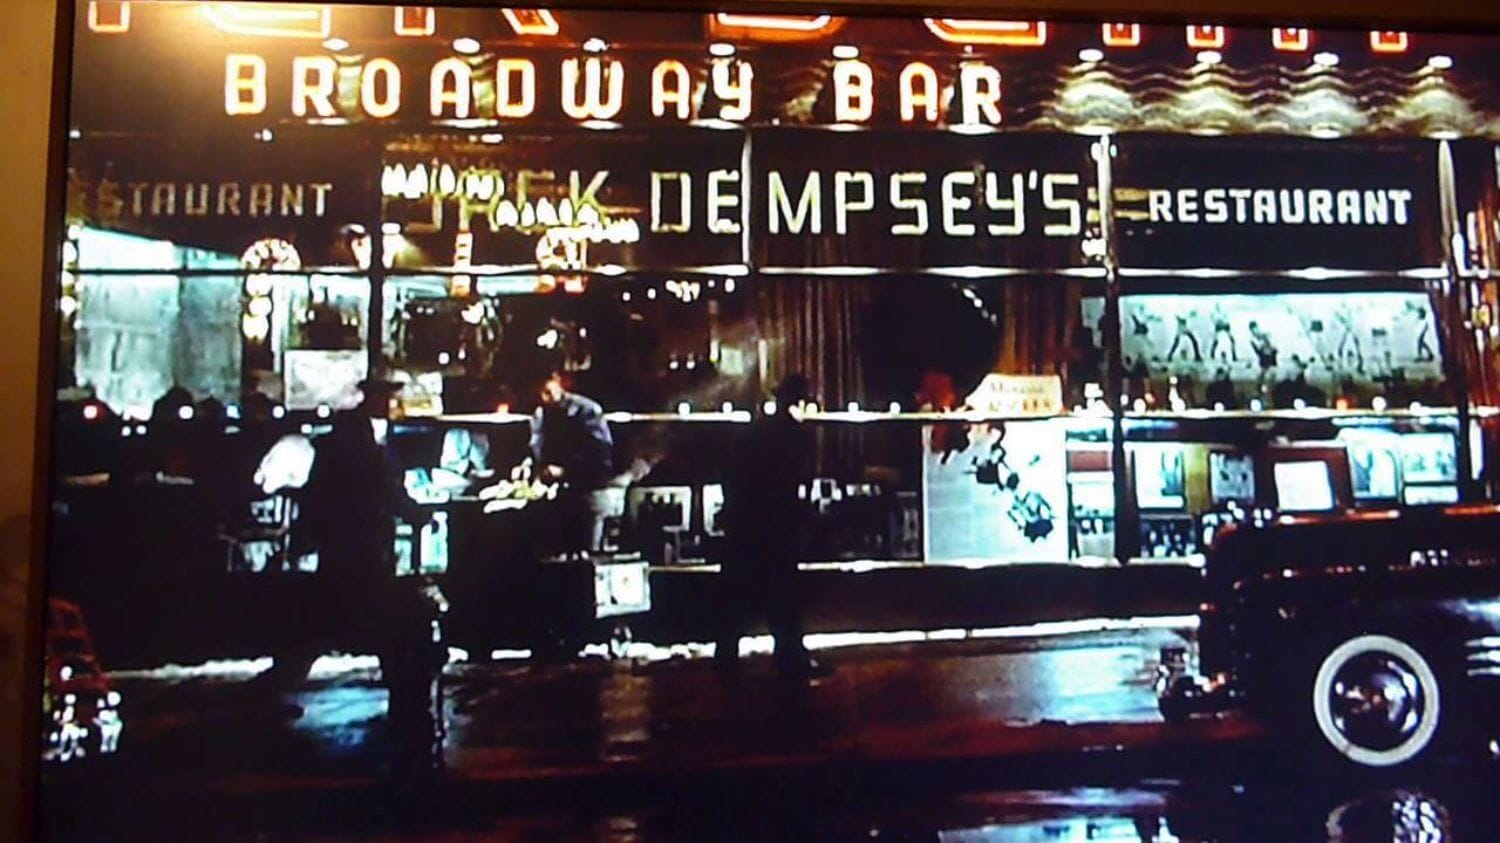 Jack Dempsey's - The Godfather